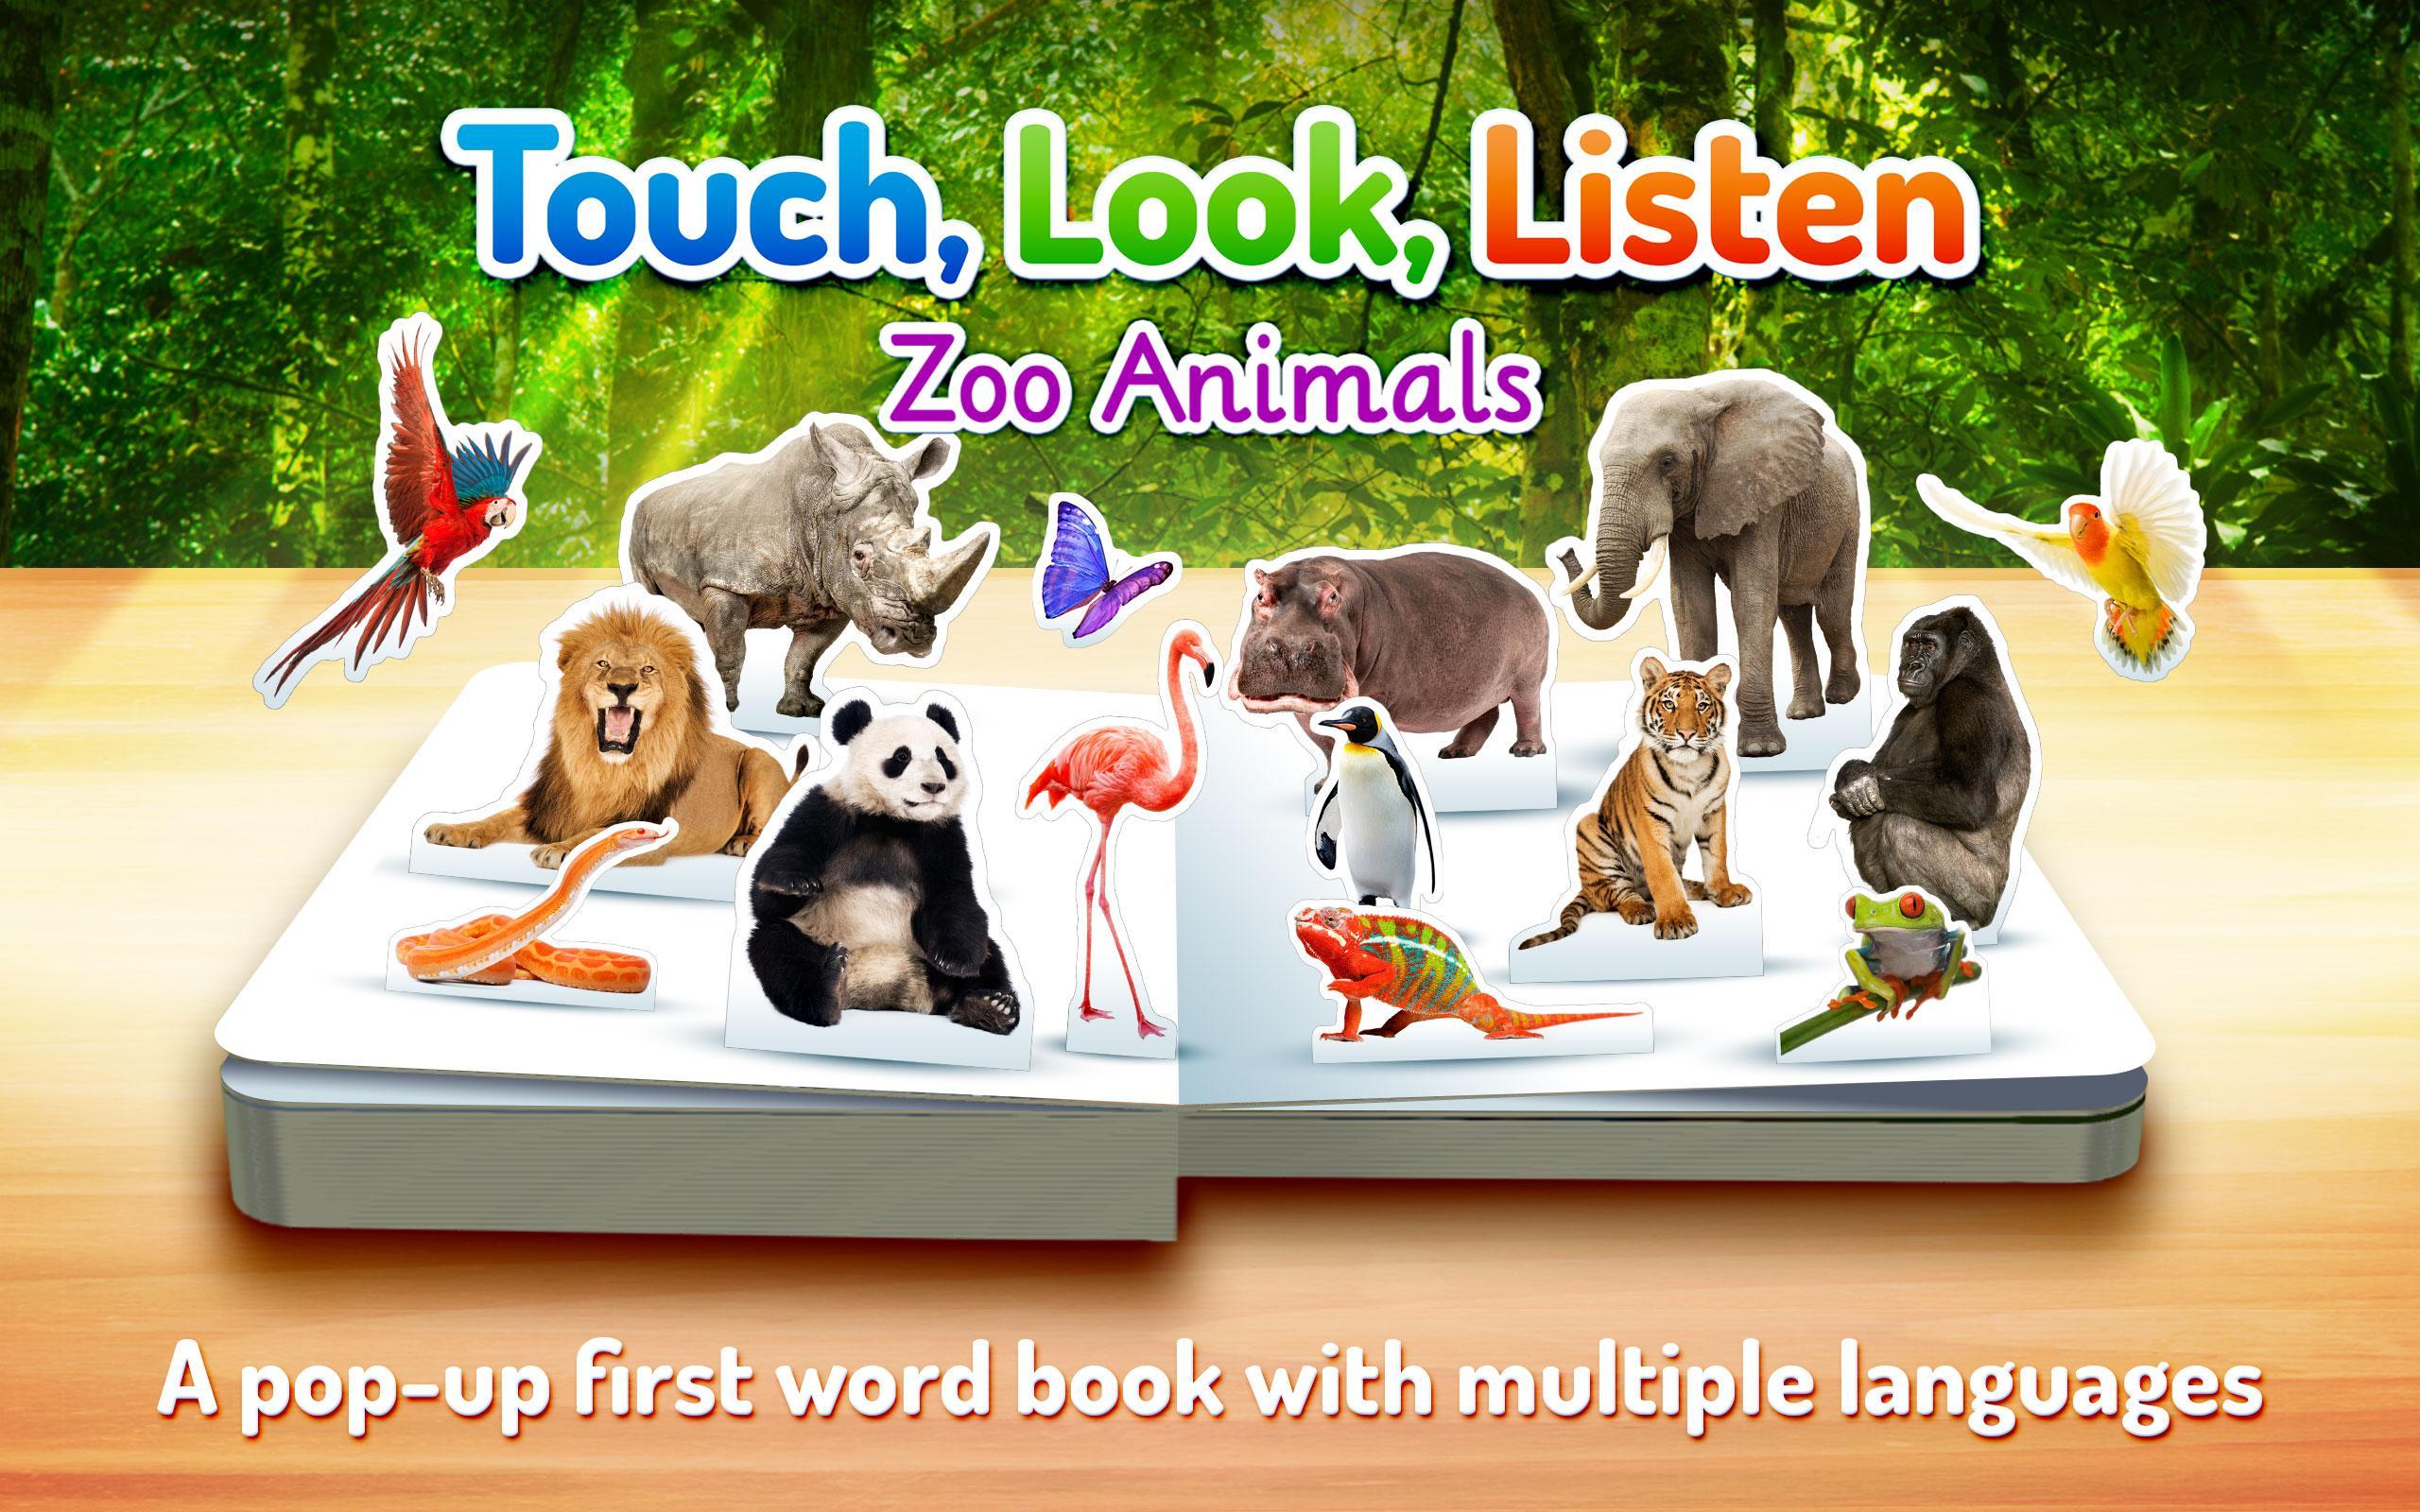 Zoo animals videos. Pop animals игра. Zoo истории. Детское приложение с животными. Touch look listen.